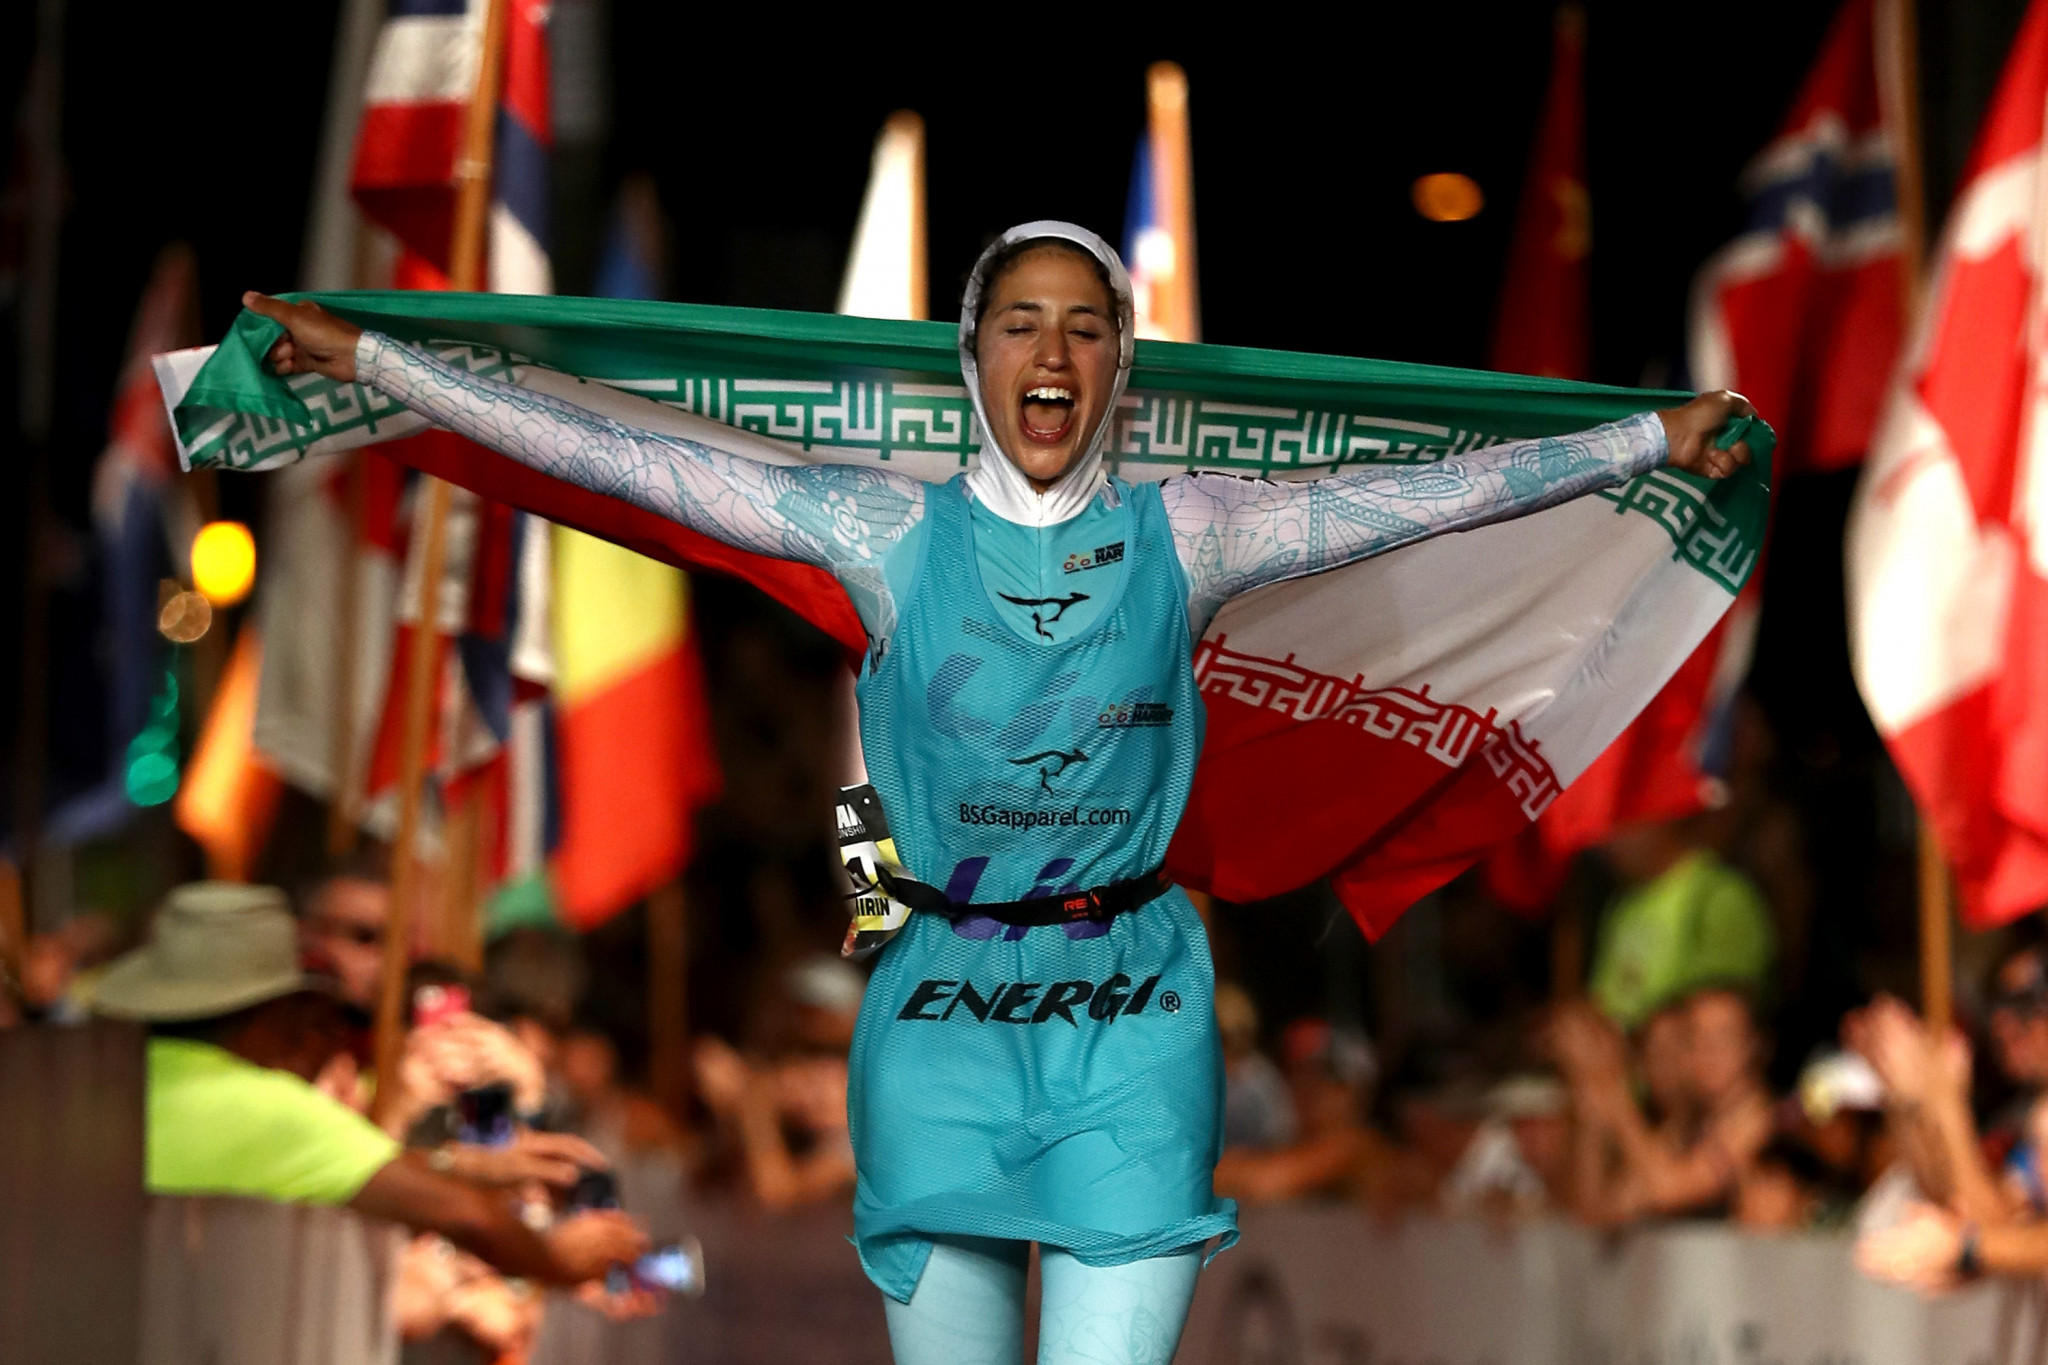 Gerami poised to represent Iran in triathlon at 2018 Asian Games